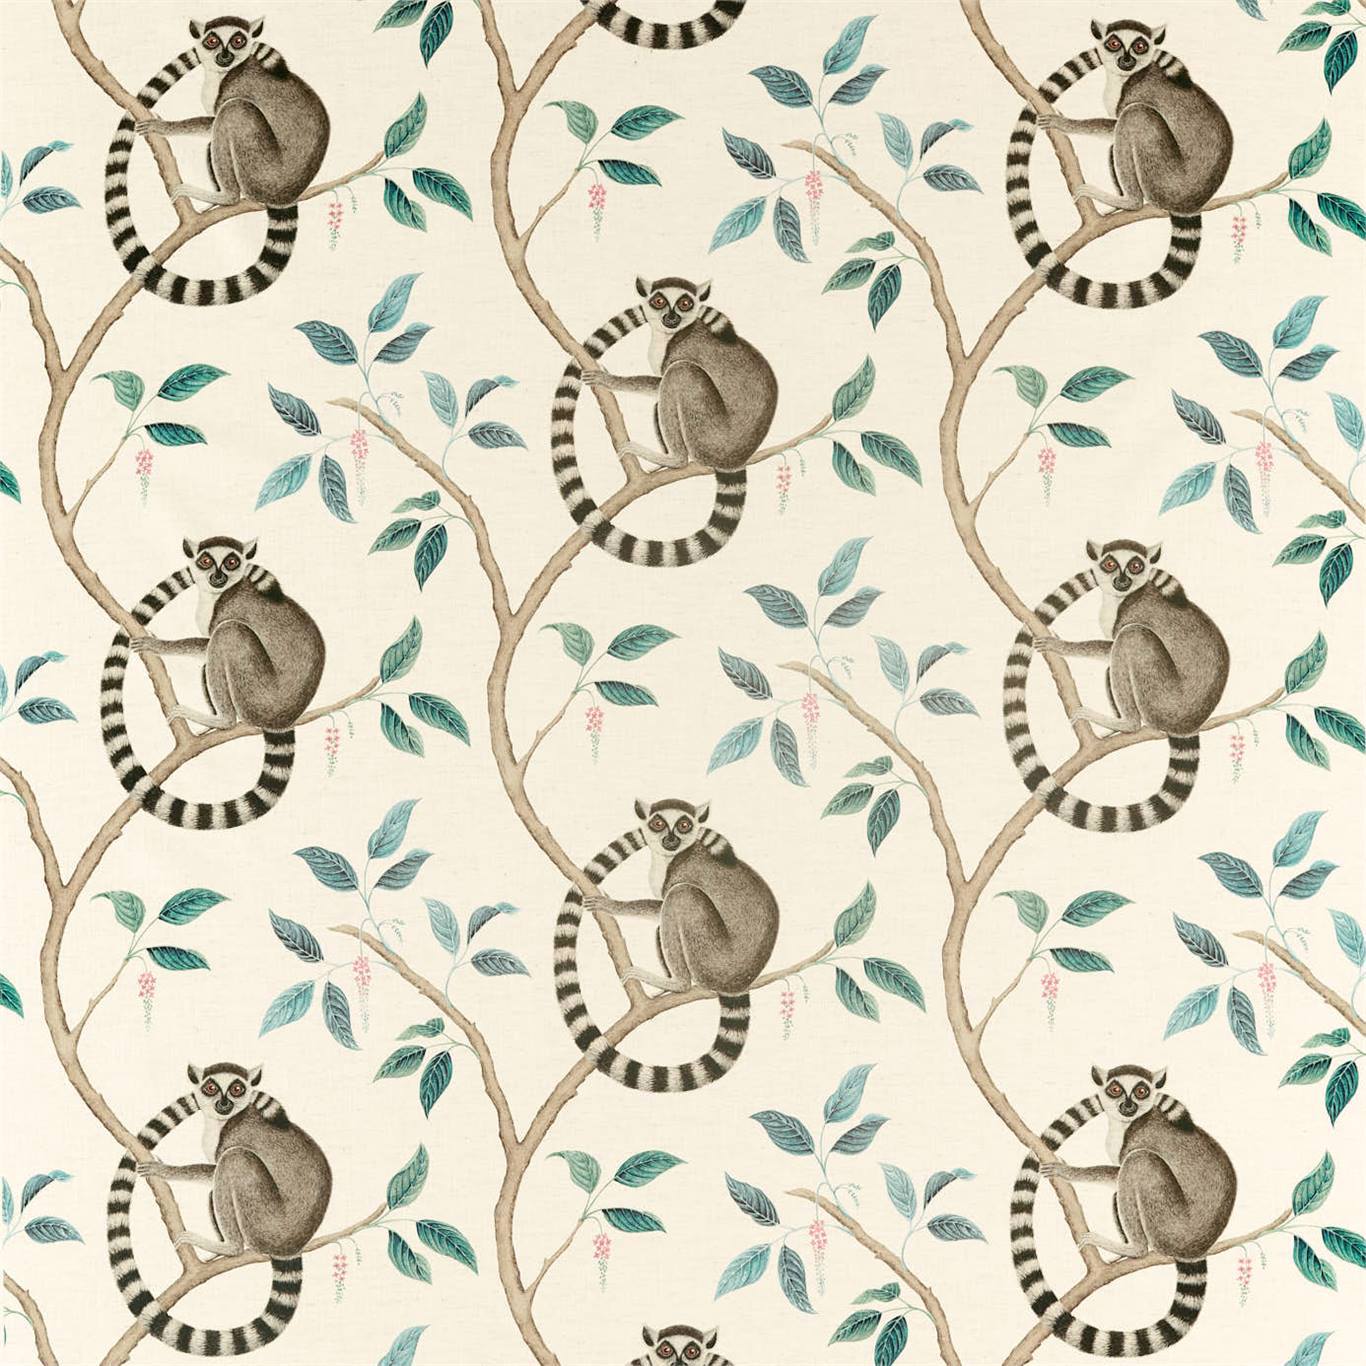 Ringtailed Lemur Fabric by Sanderson